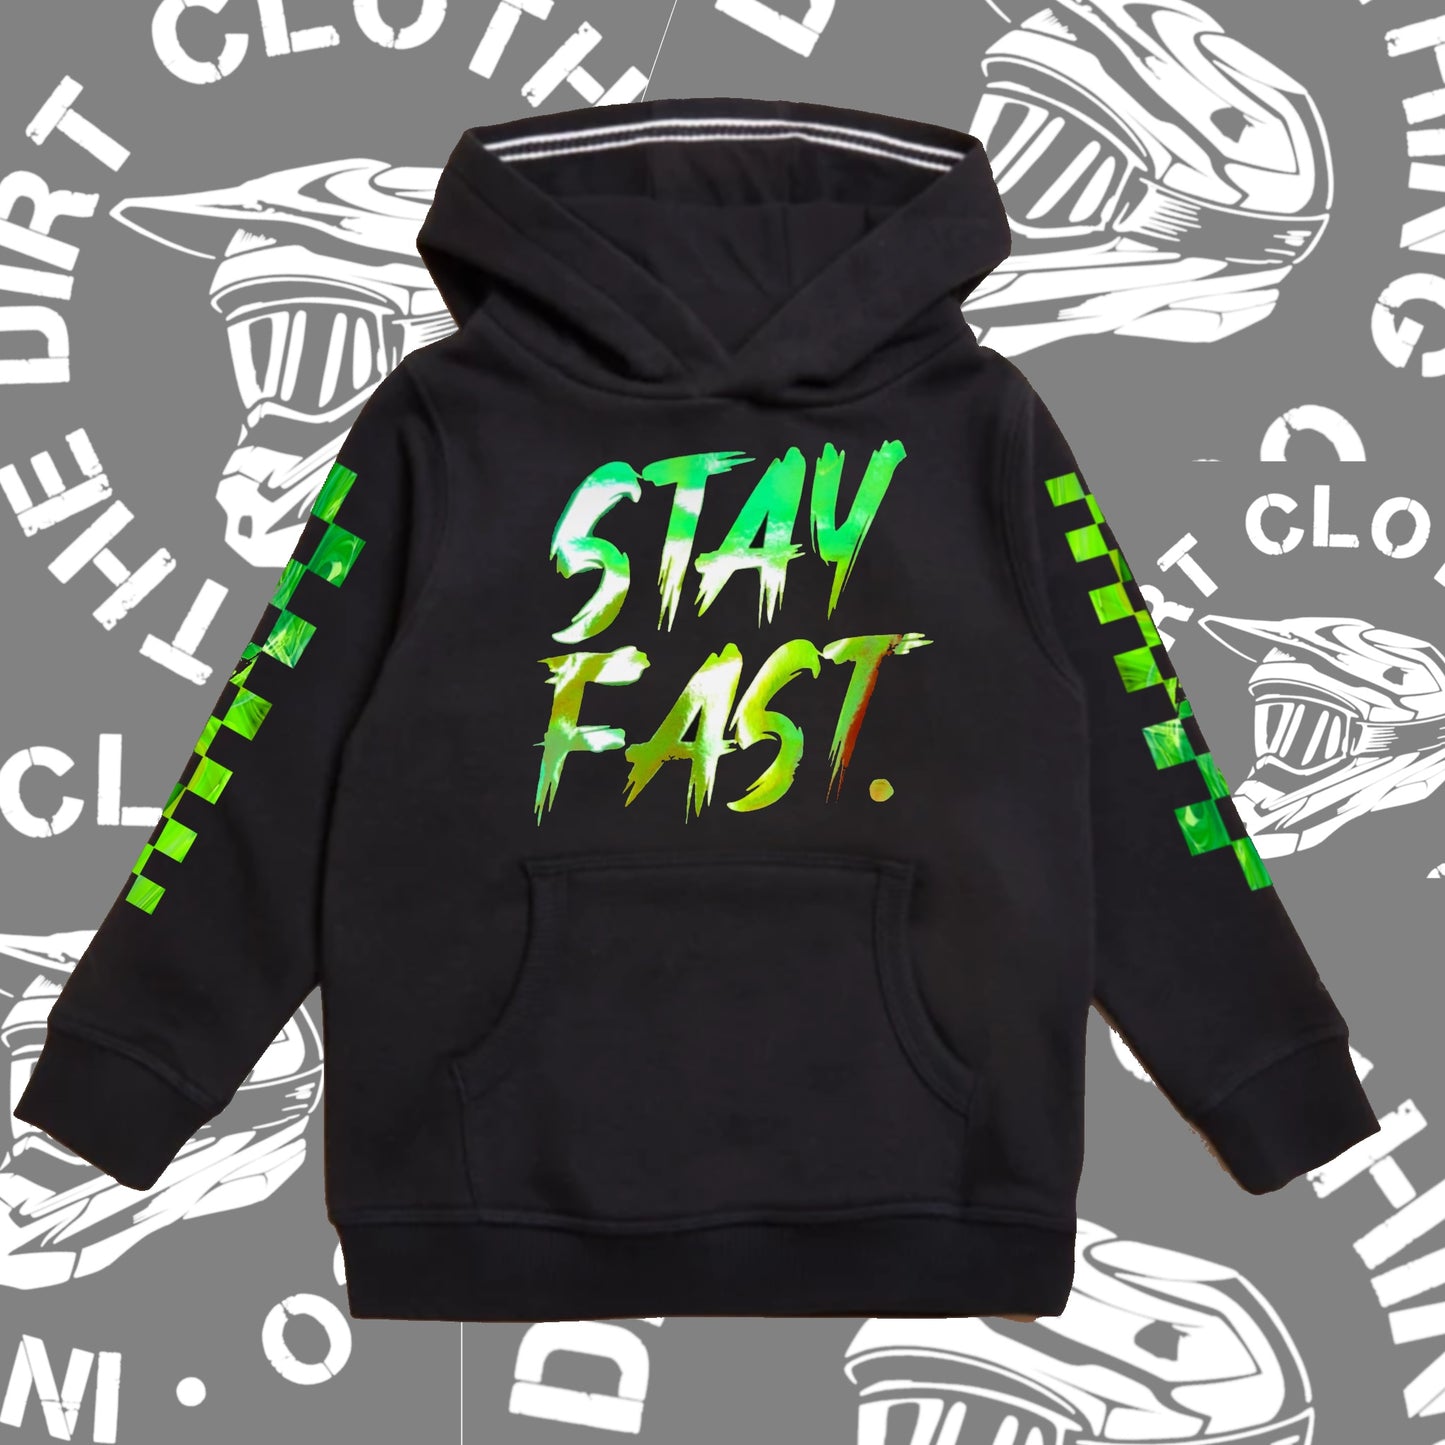 Stay fast / send it hoodie (chameleon print)